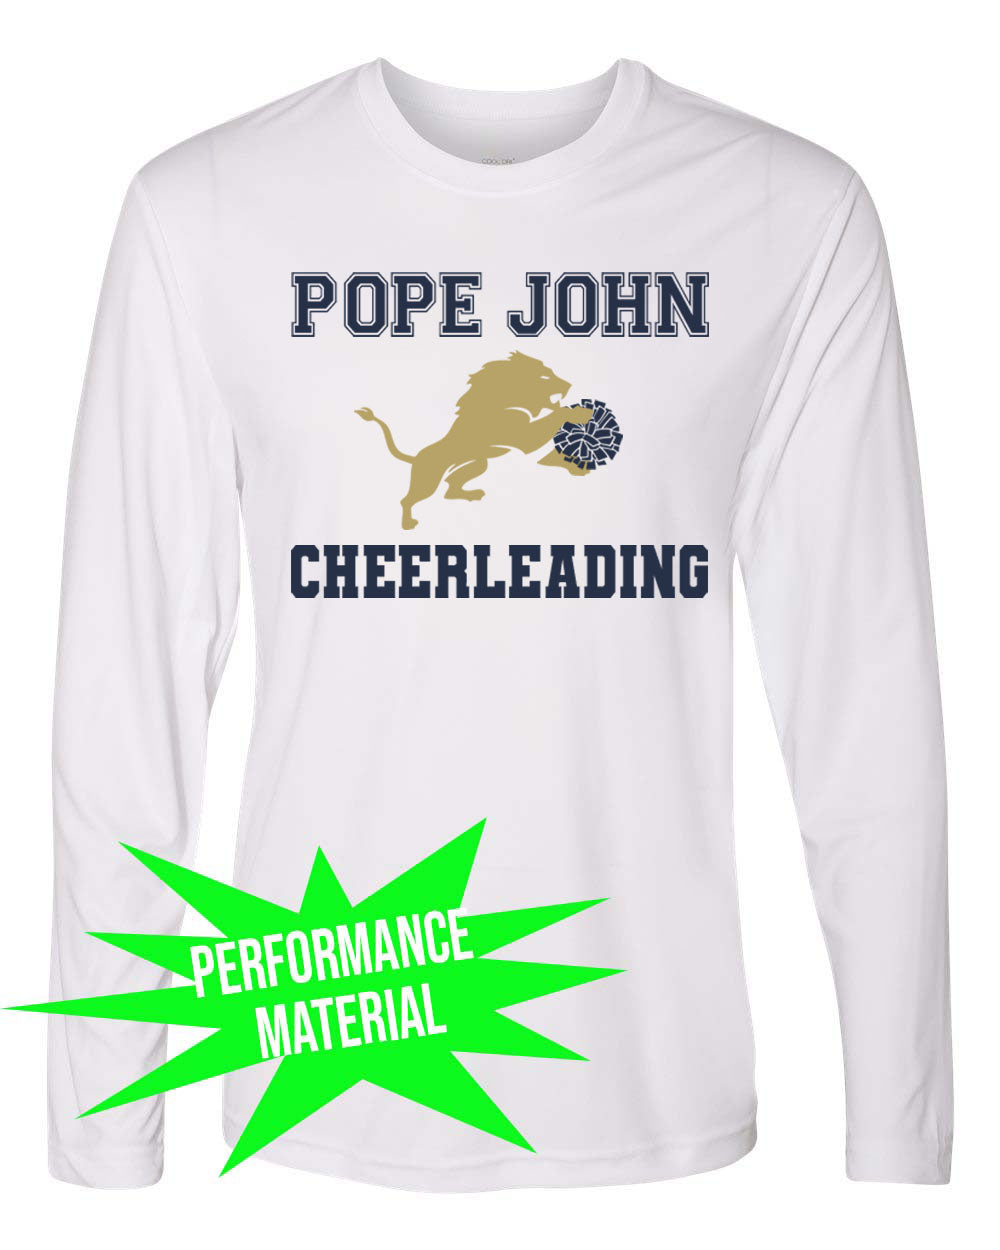 Pope John Cheer Performance Material Design 1 Long Sleeve Shirt